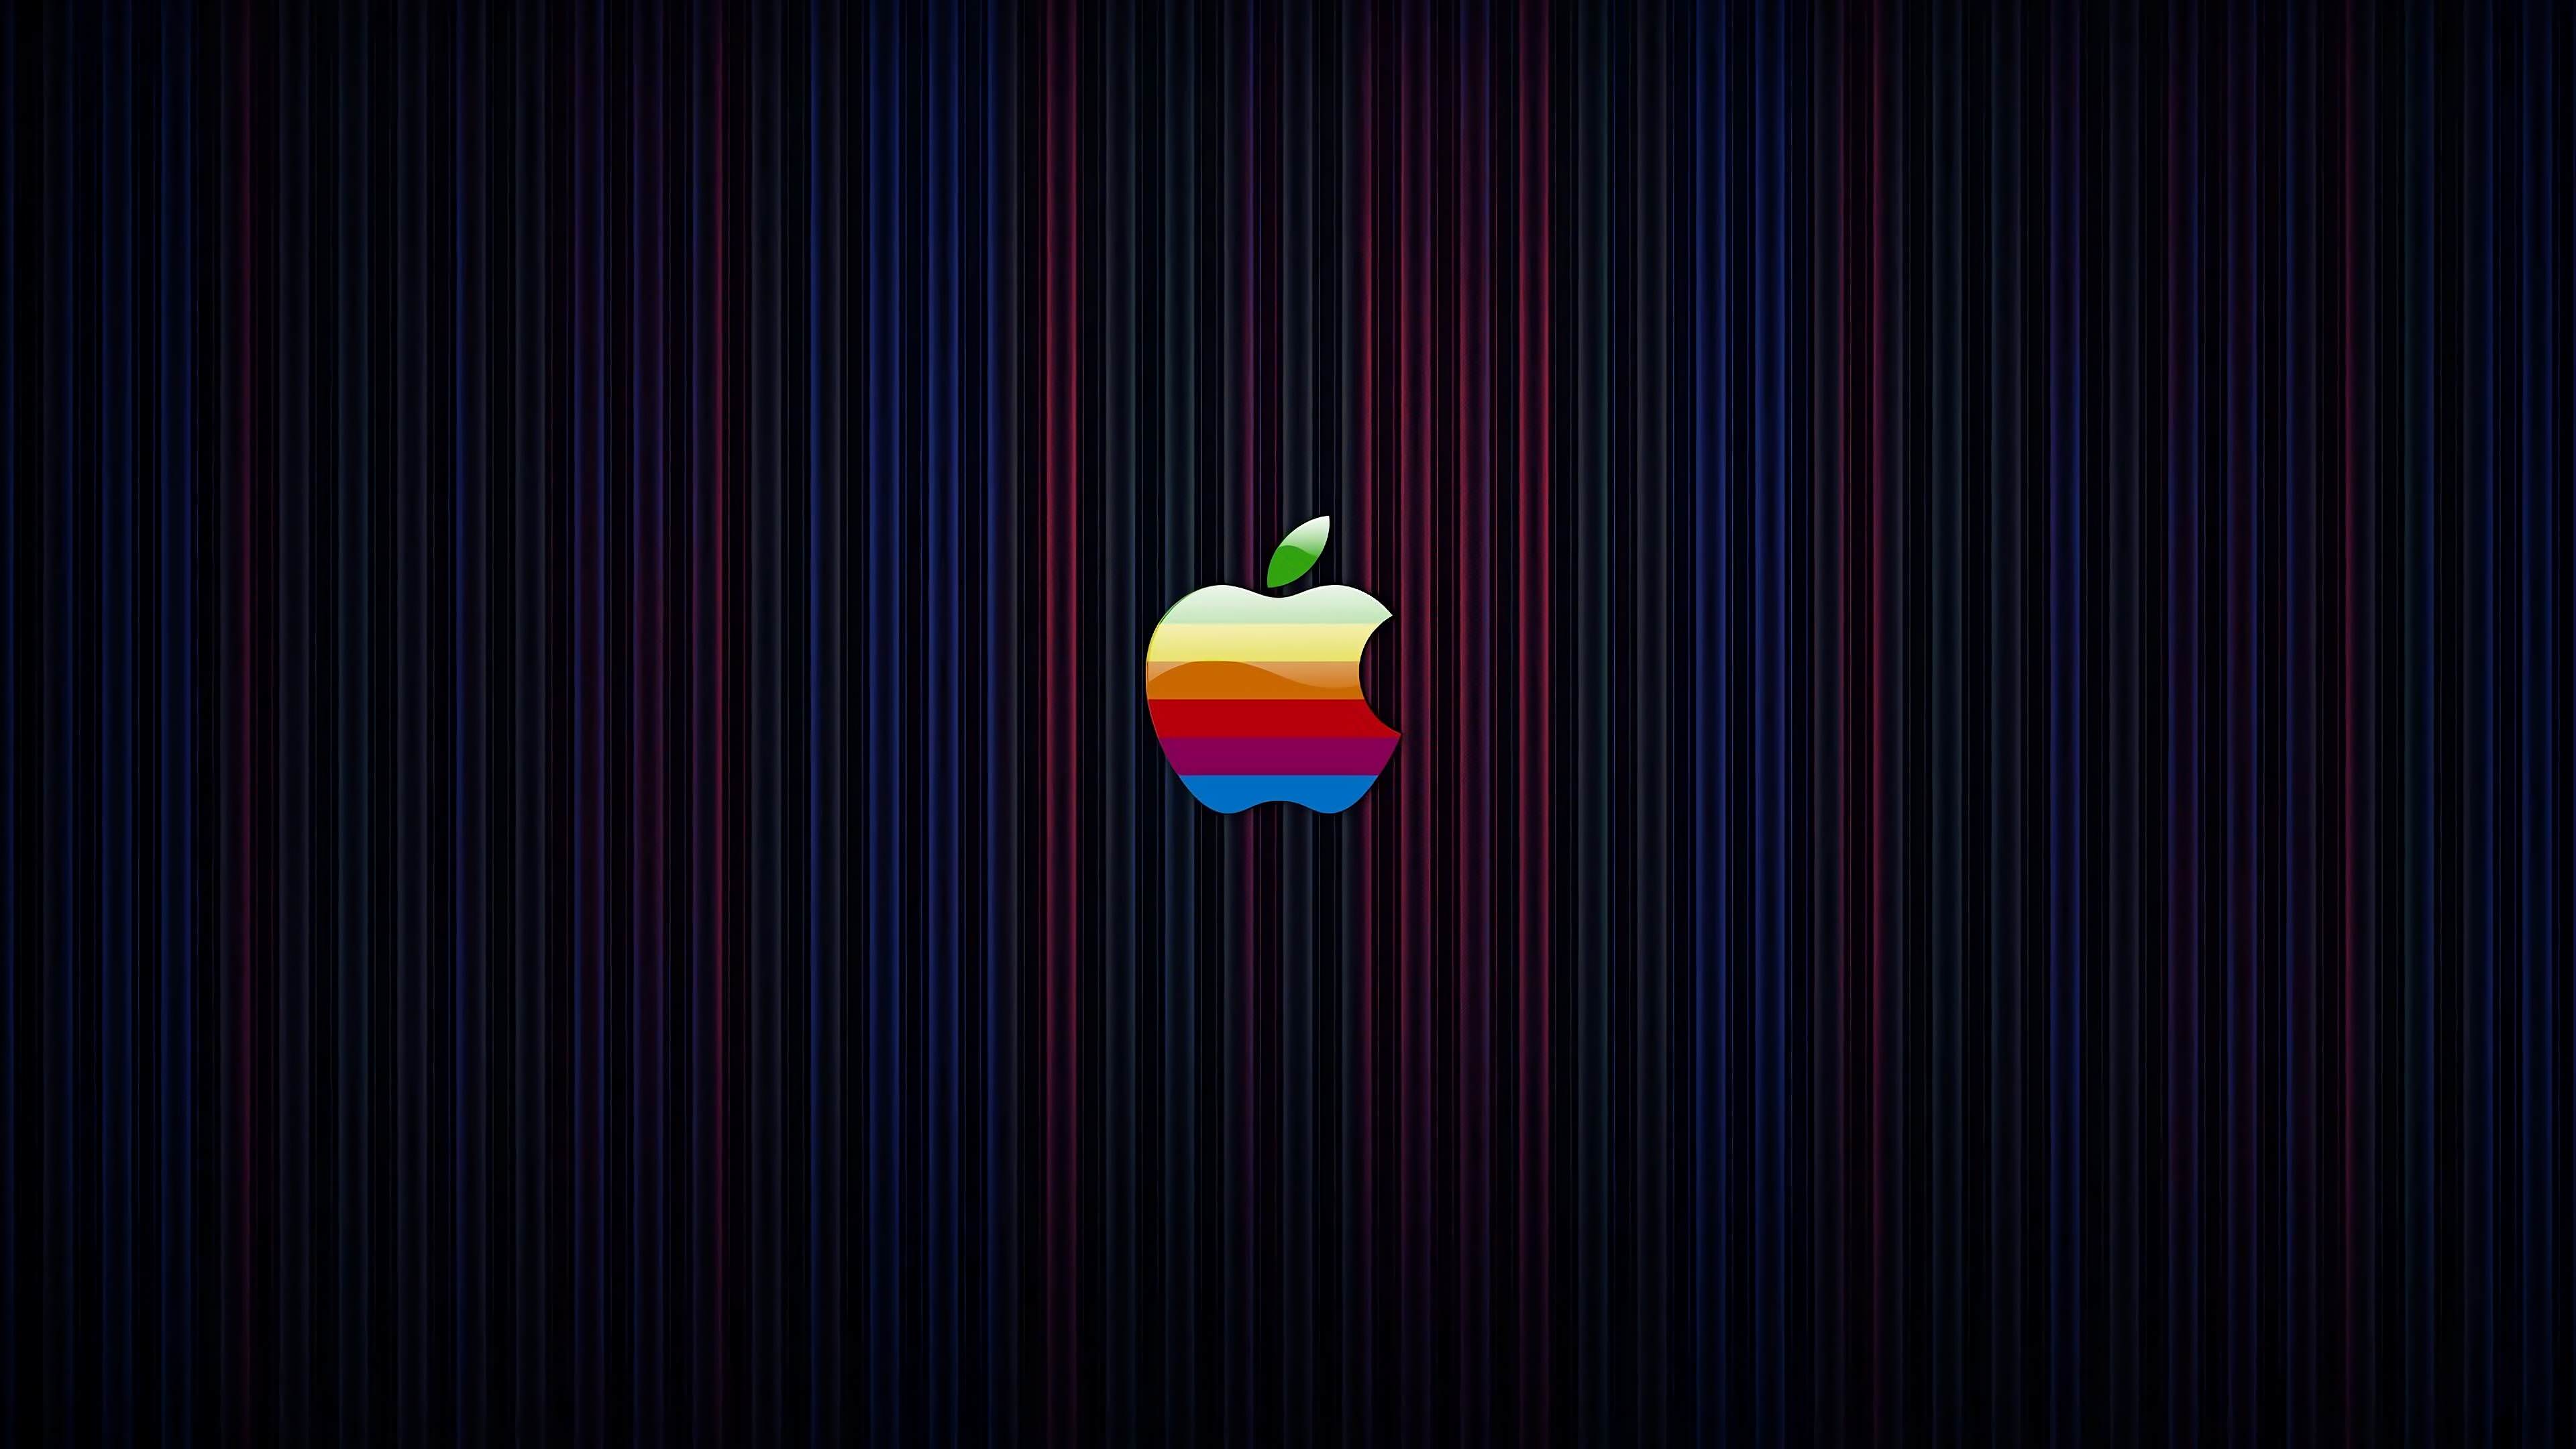 Apple Inc. [Brand]